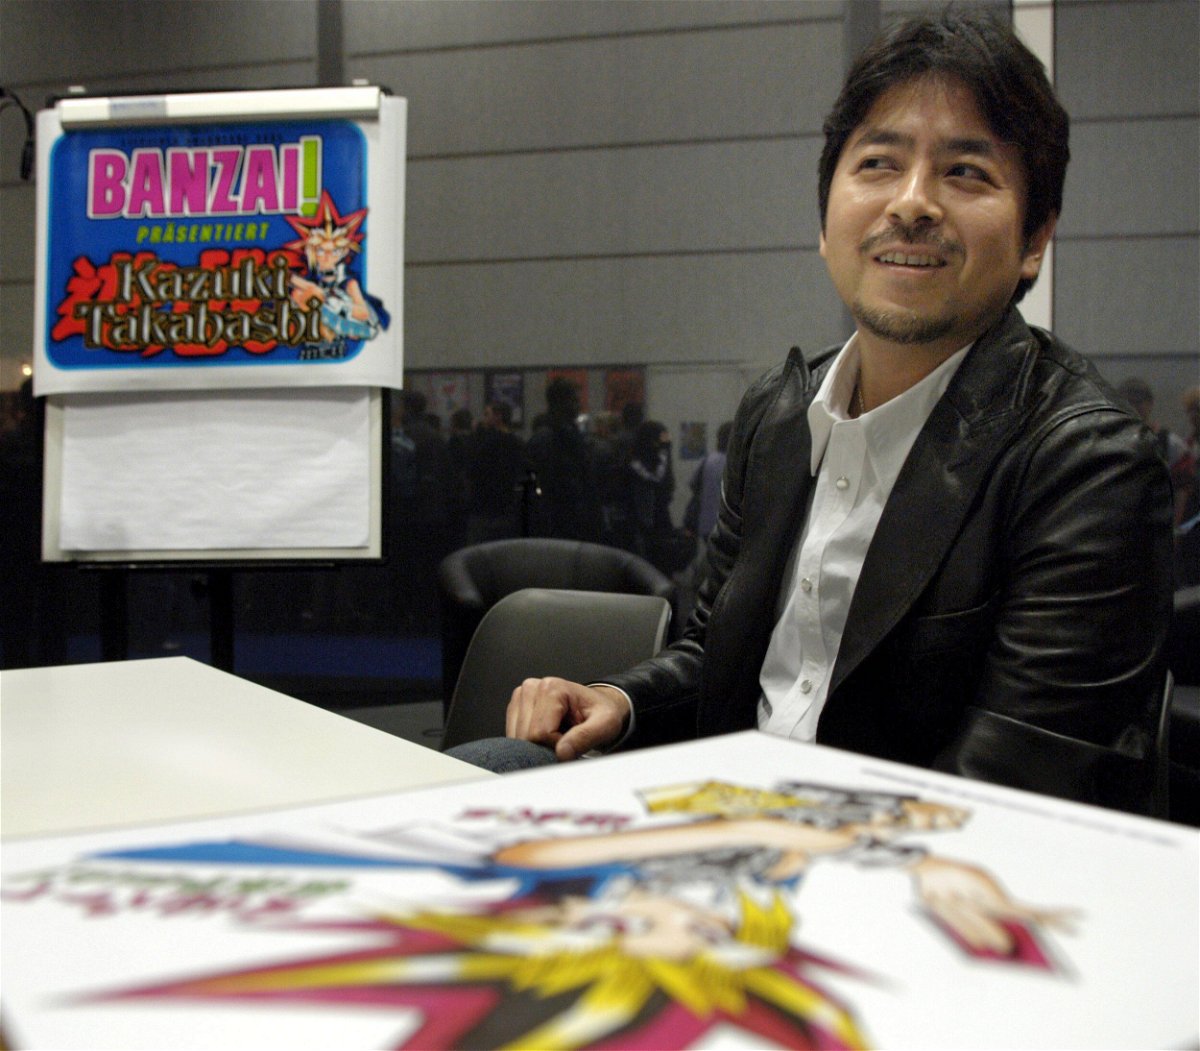 <i>Peter Endig/EPA/Shutterstock</i><br/>Manga star and inventor of Yu-gi-oh! cards Kazuki Takahashi at the Leipzig Book Fair March 19